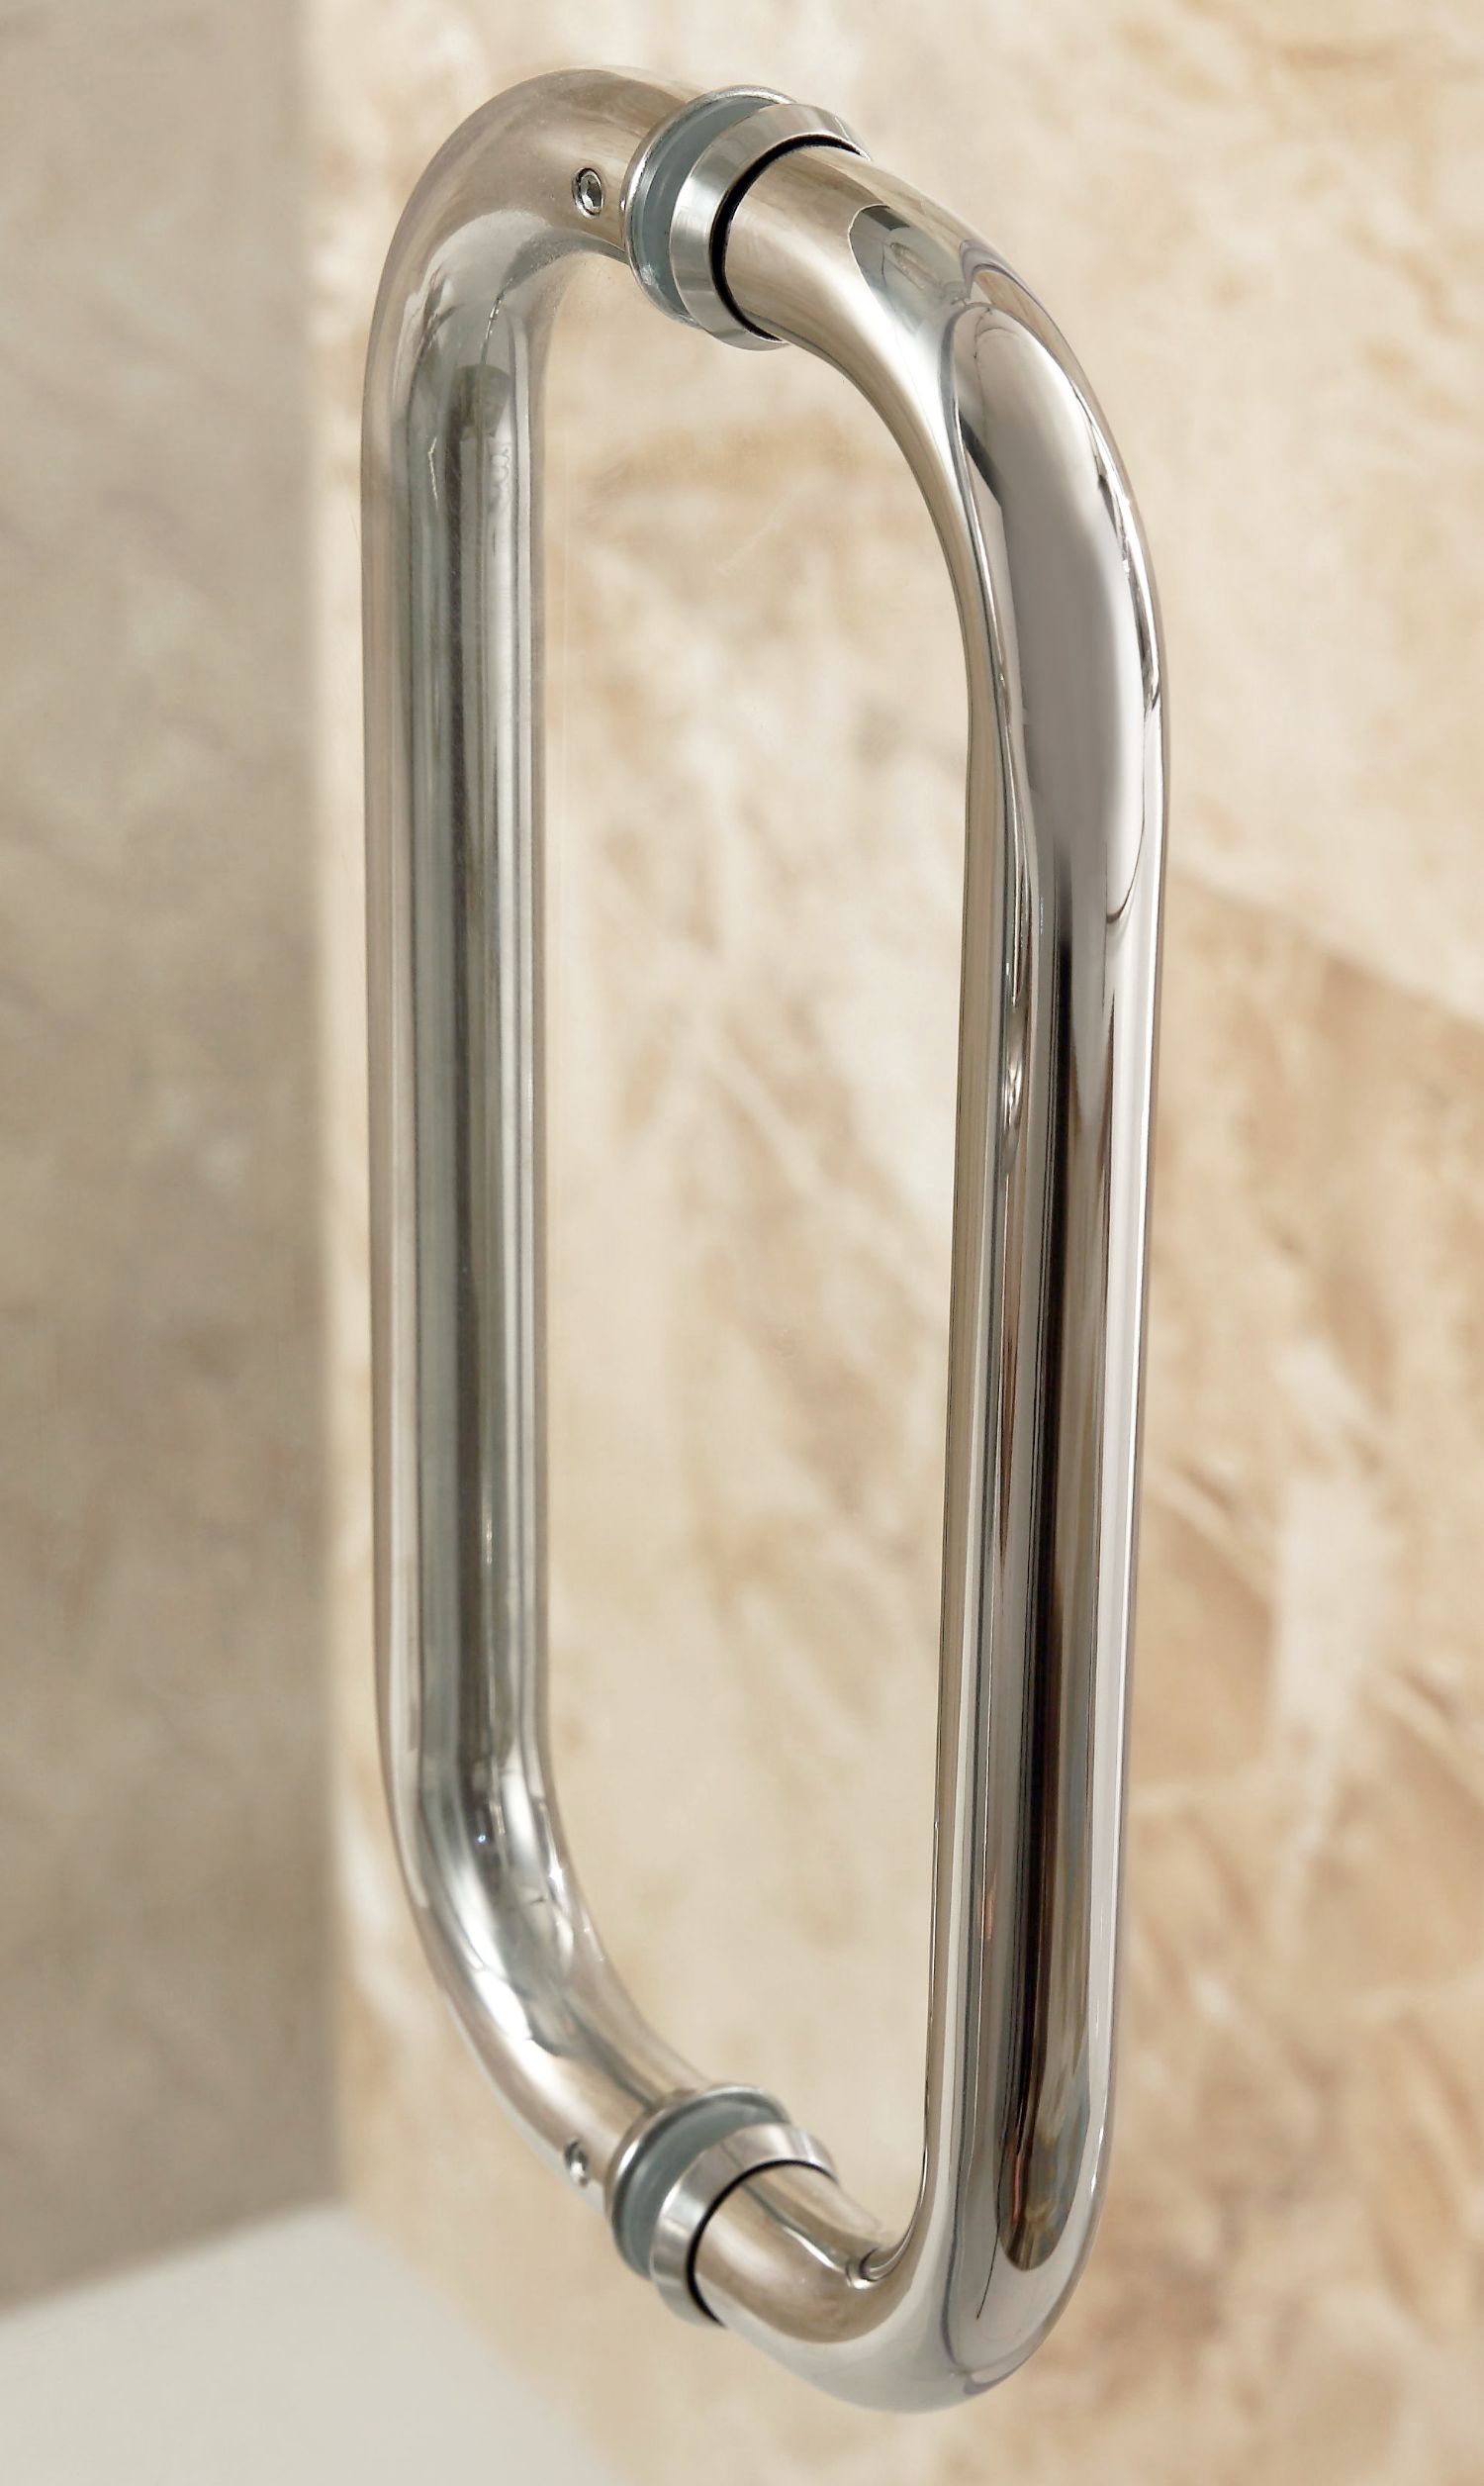 Regent 48 in. x 72 in. Framed Sliding Shower Door in Polished Chrome with Handle